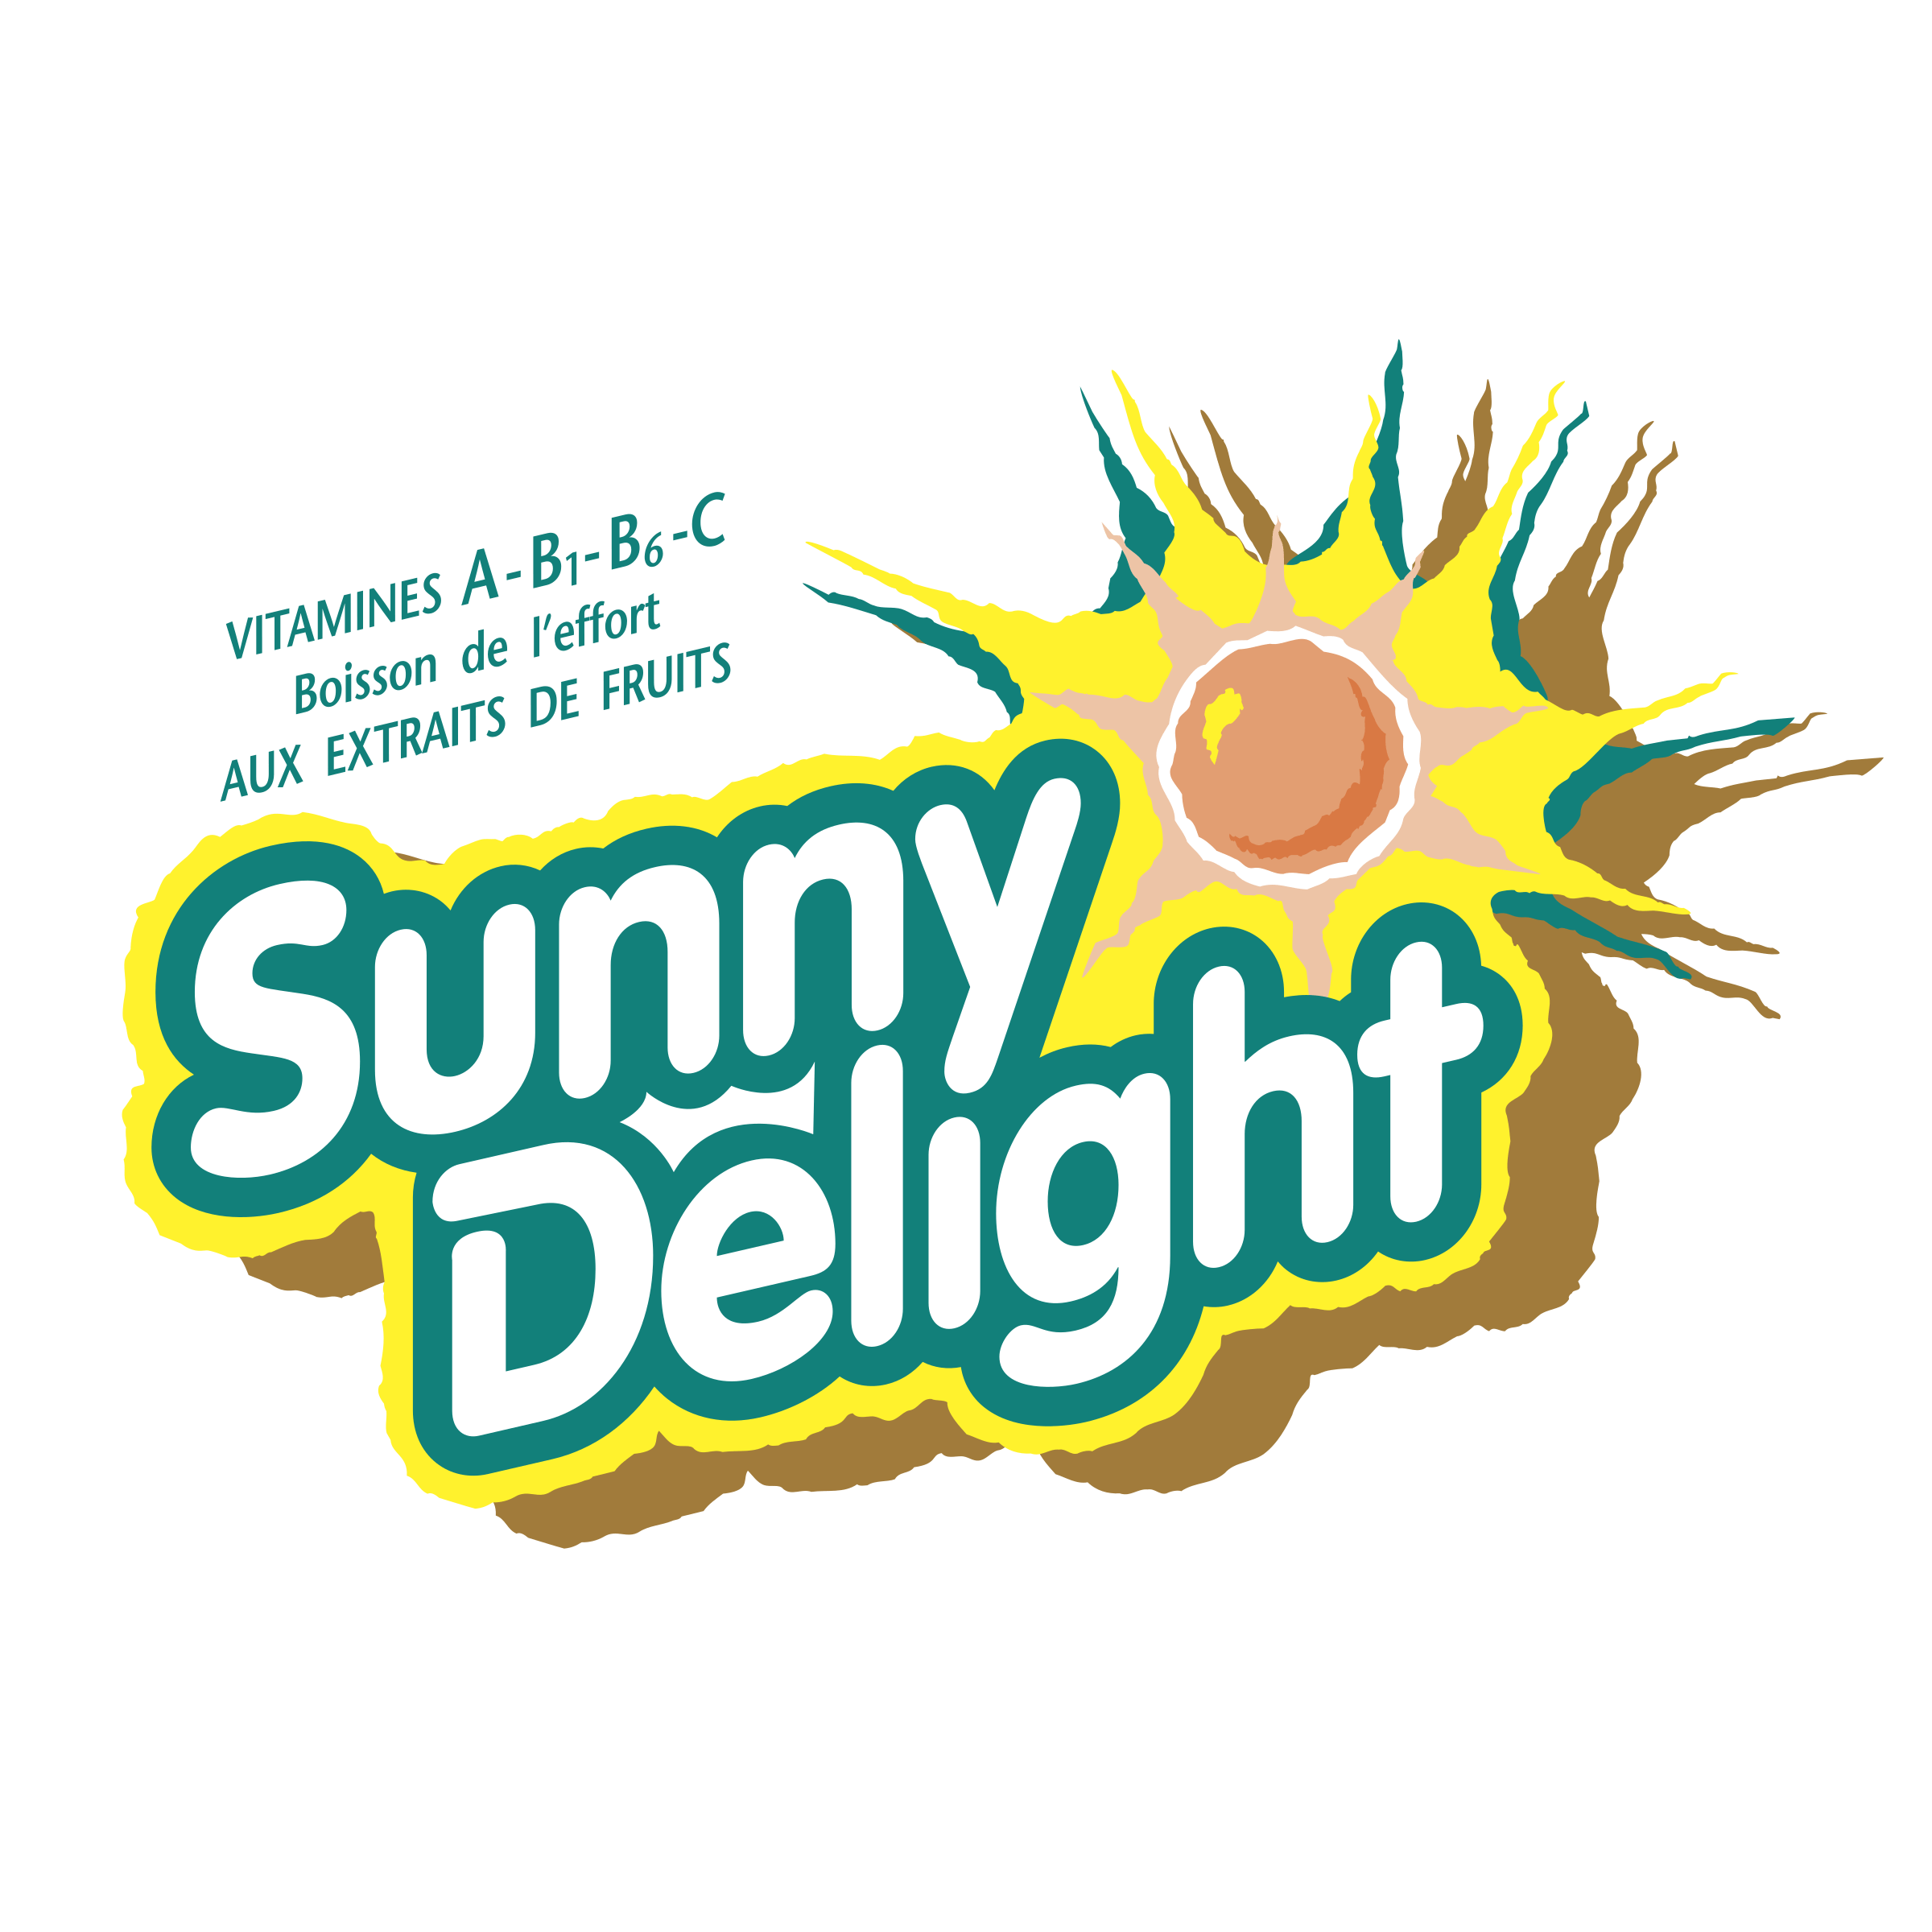 Sunny Logo - Sunny Delight Logo PNG Transparent & SVG Vector - Freebie Supply